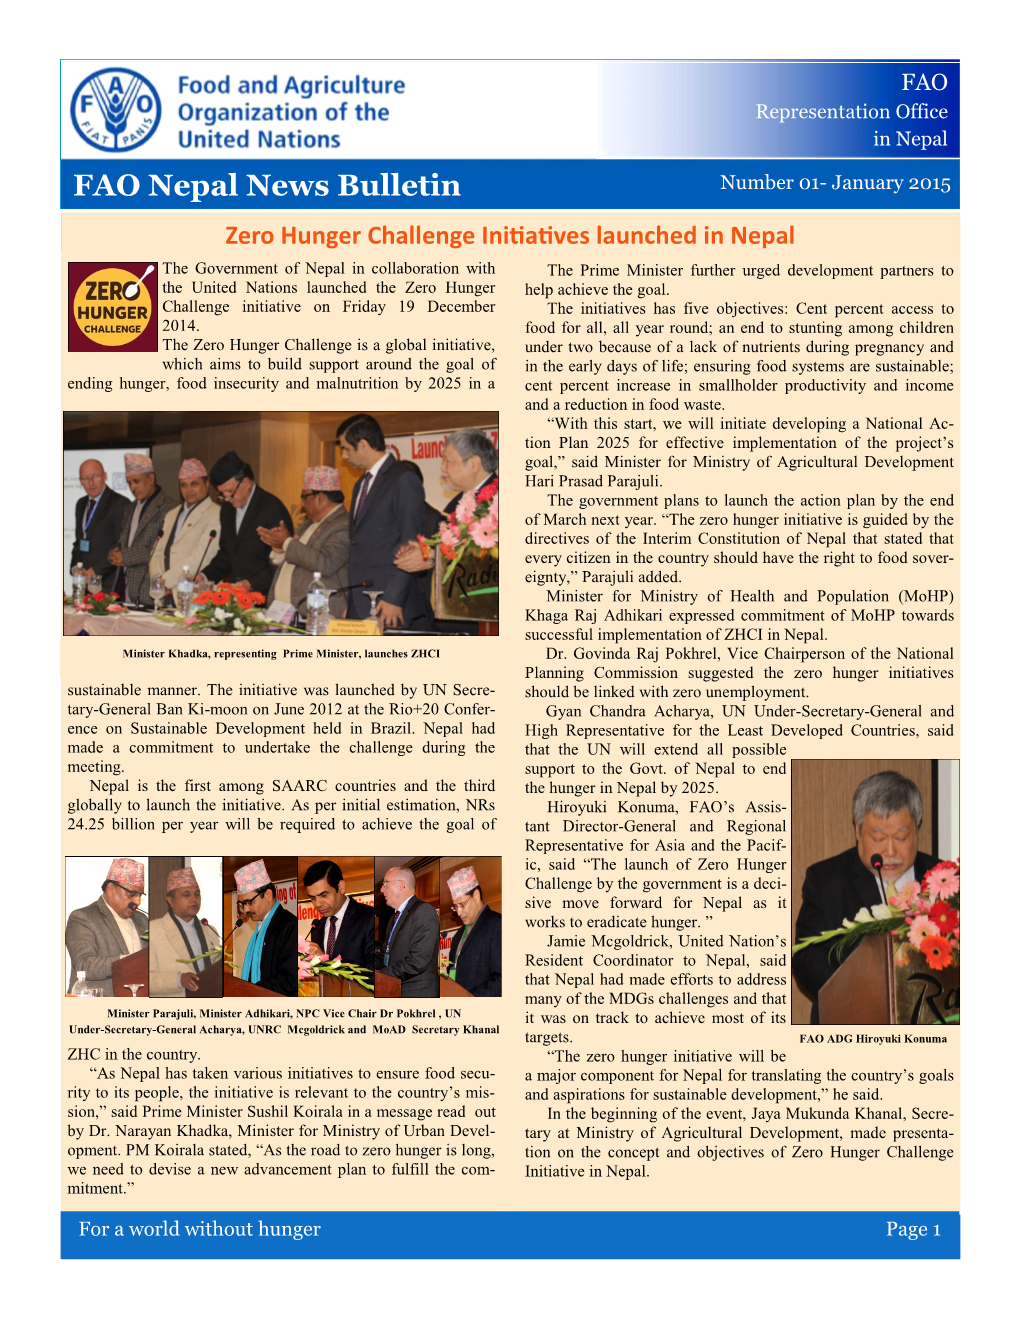 FAO Nepal News Bulletin